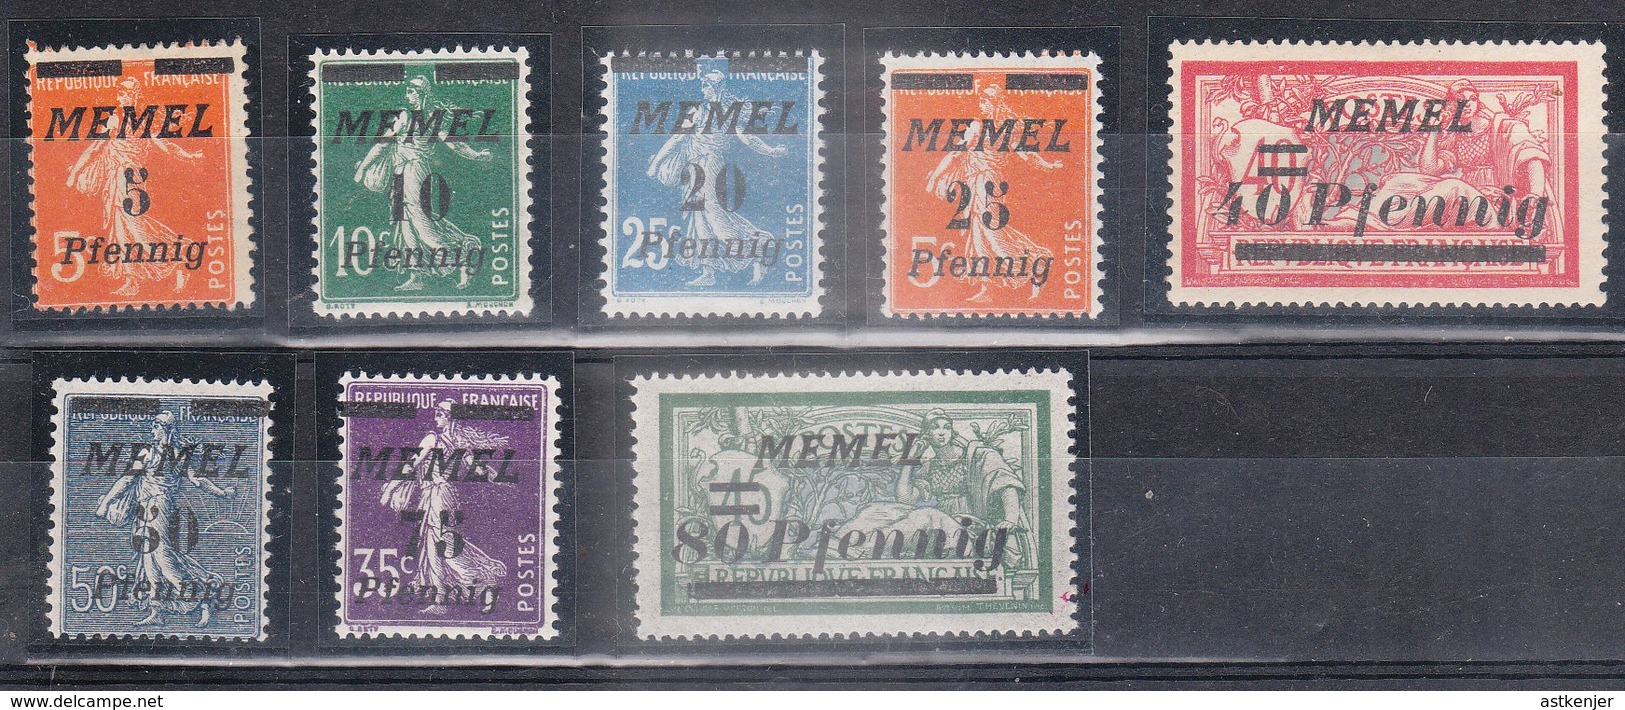 MEMEL - Petite Collection De 8 Timbres (année 1922)  - TOP AFFAIRE - Ongebruikt